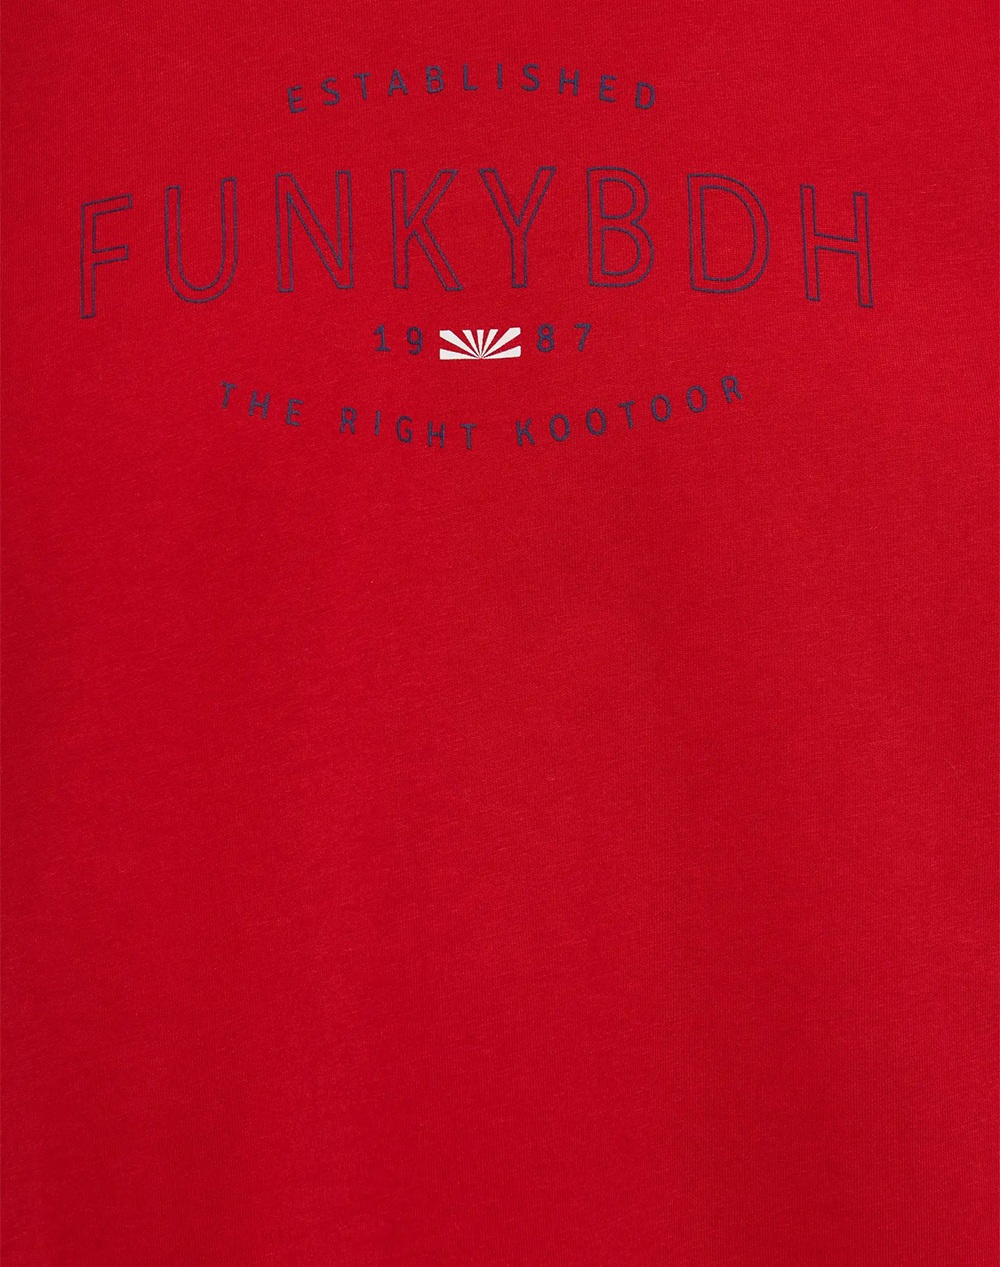 FUNKY BUDDHA T-shirt cu model tiparit Funky Buddha